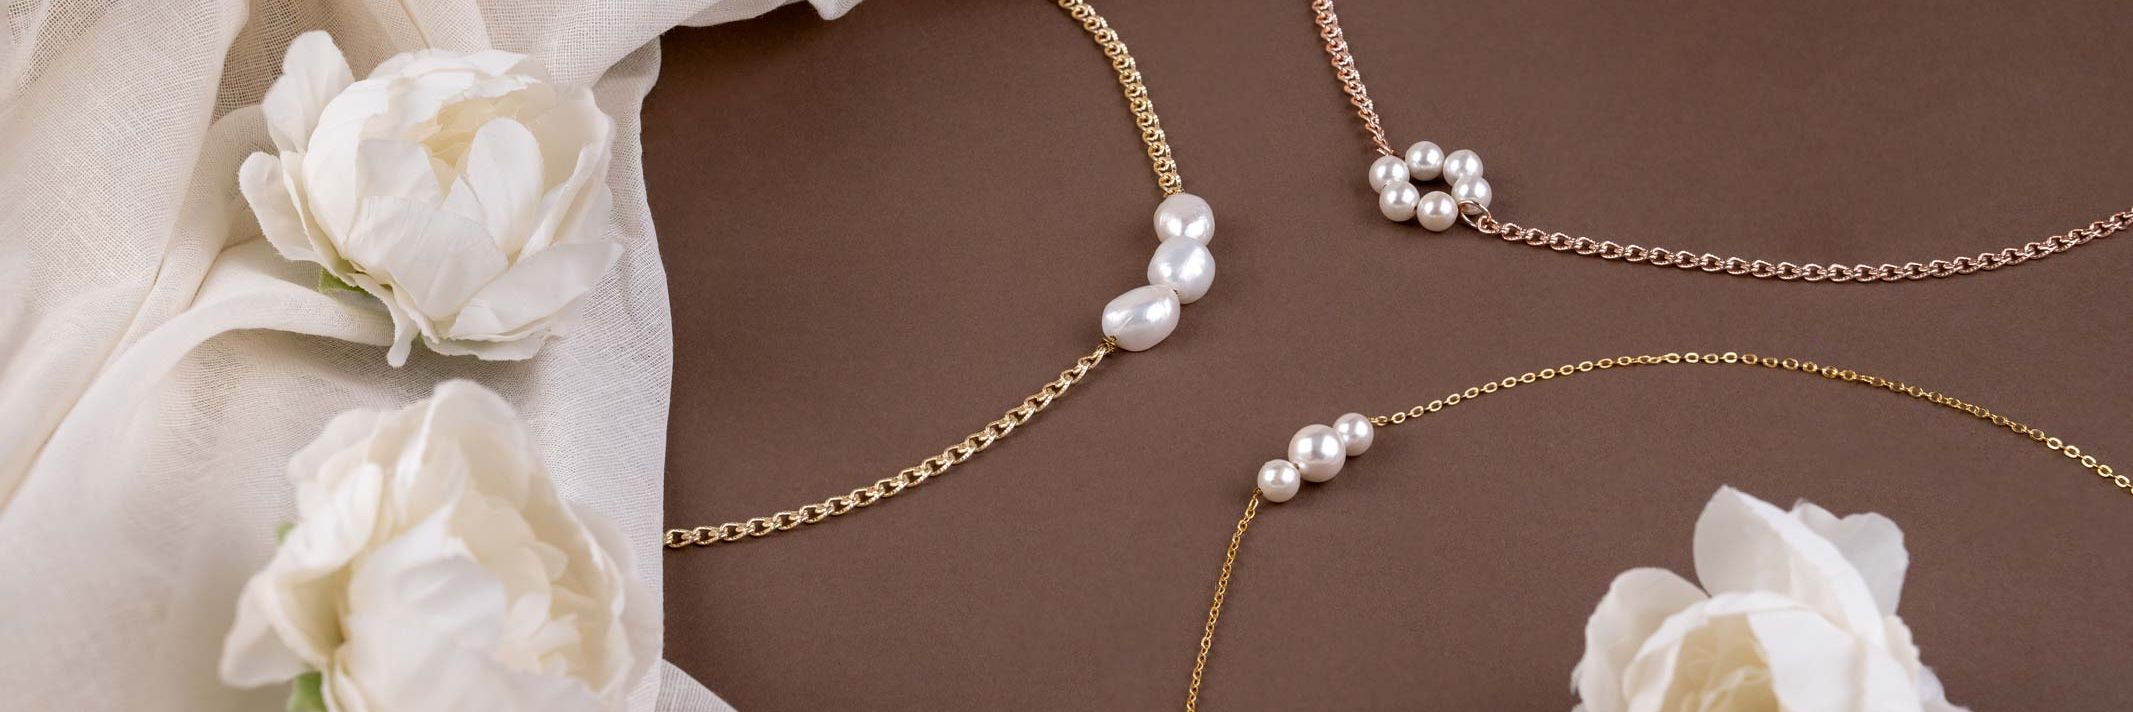 New Fashion Pearl Jewelry Sets Luxury Rhinestone Ball Pearls Necklace  Earrings Bracelet Sets for Women | Wish